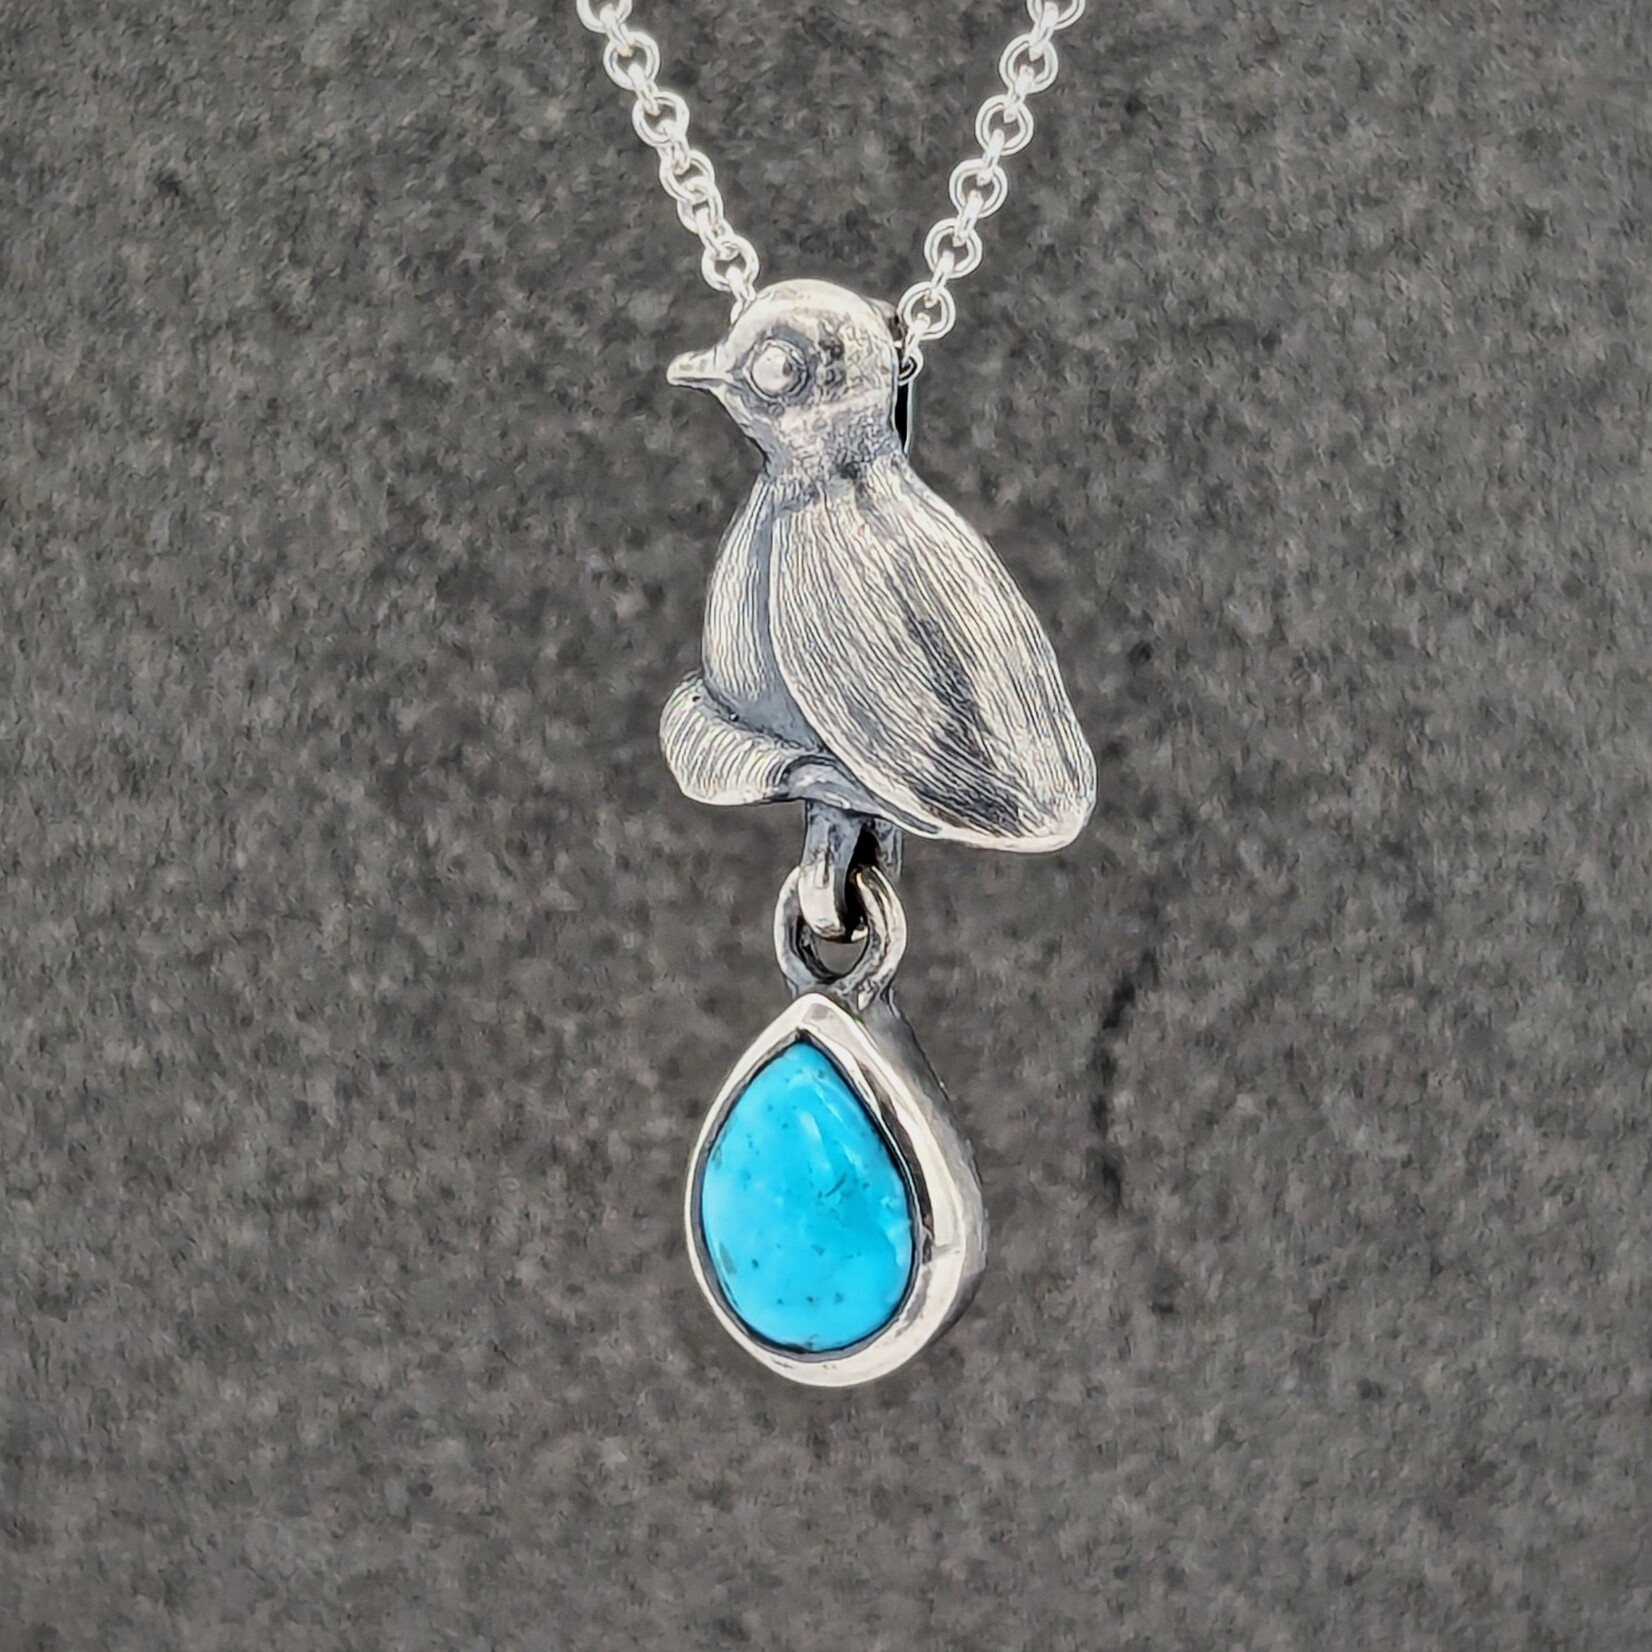 Carrie Nunes Jewelry Dove with Drop Pendant